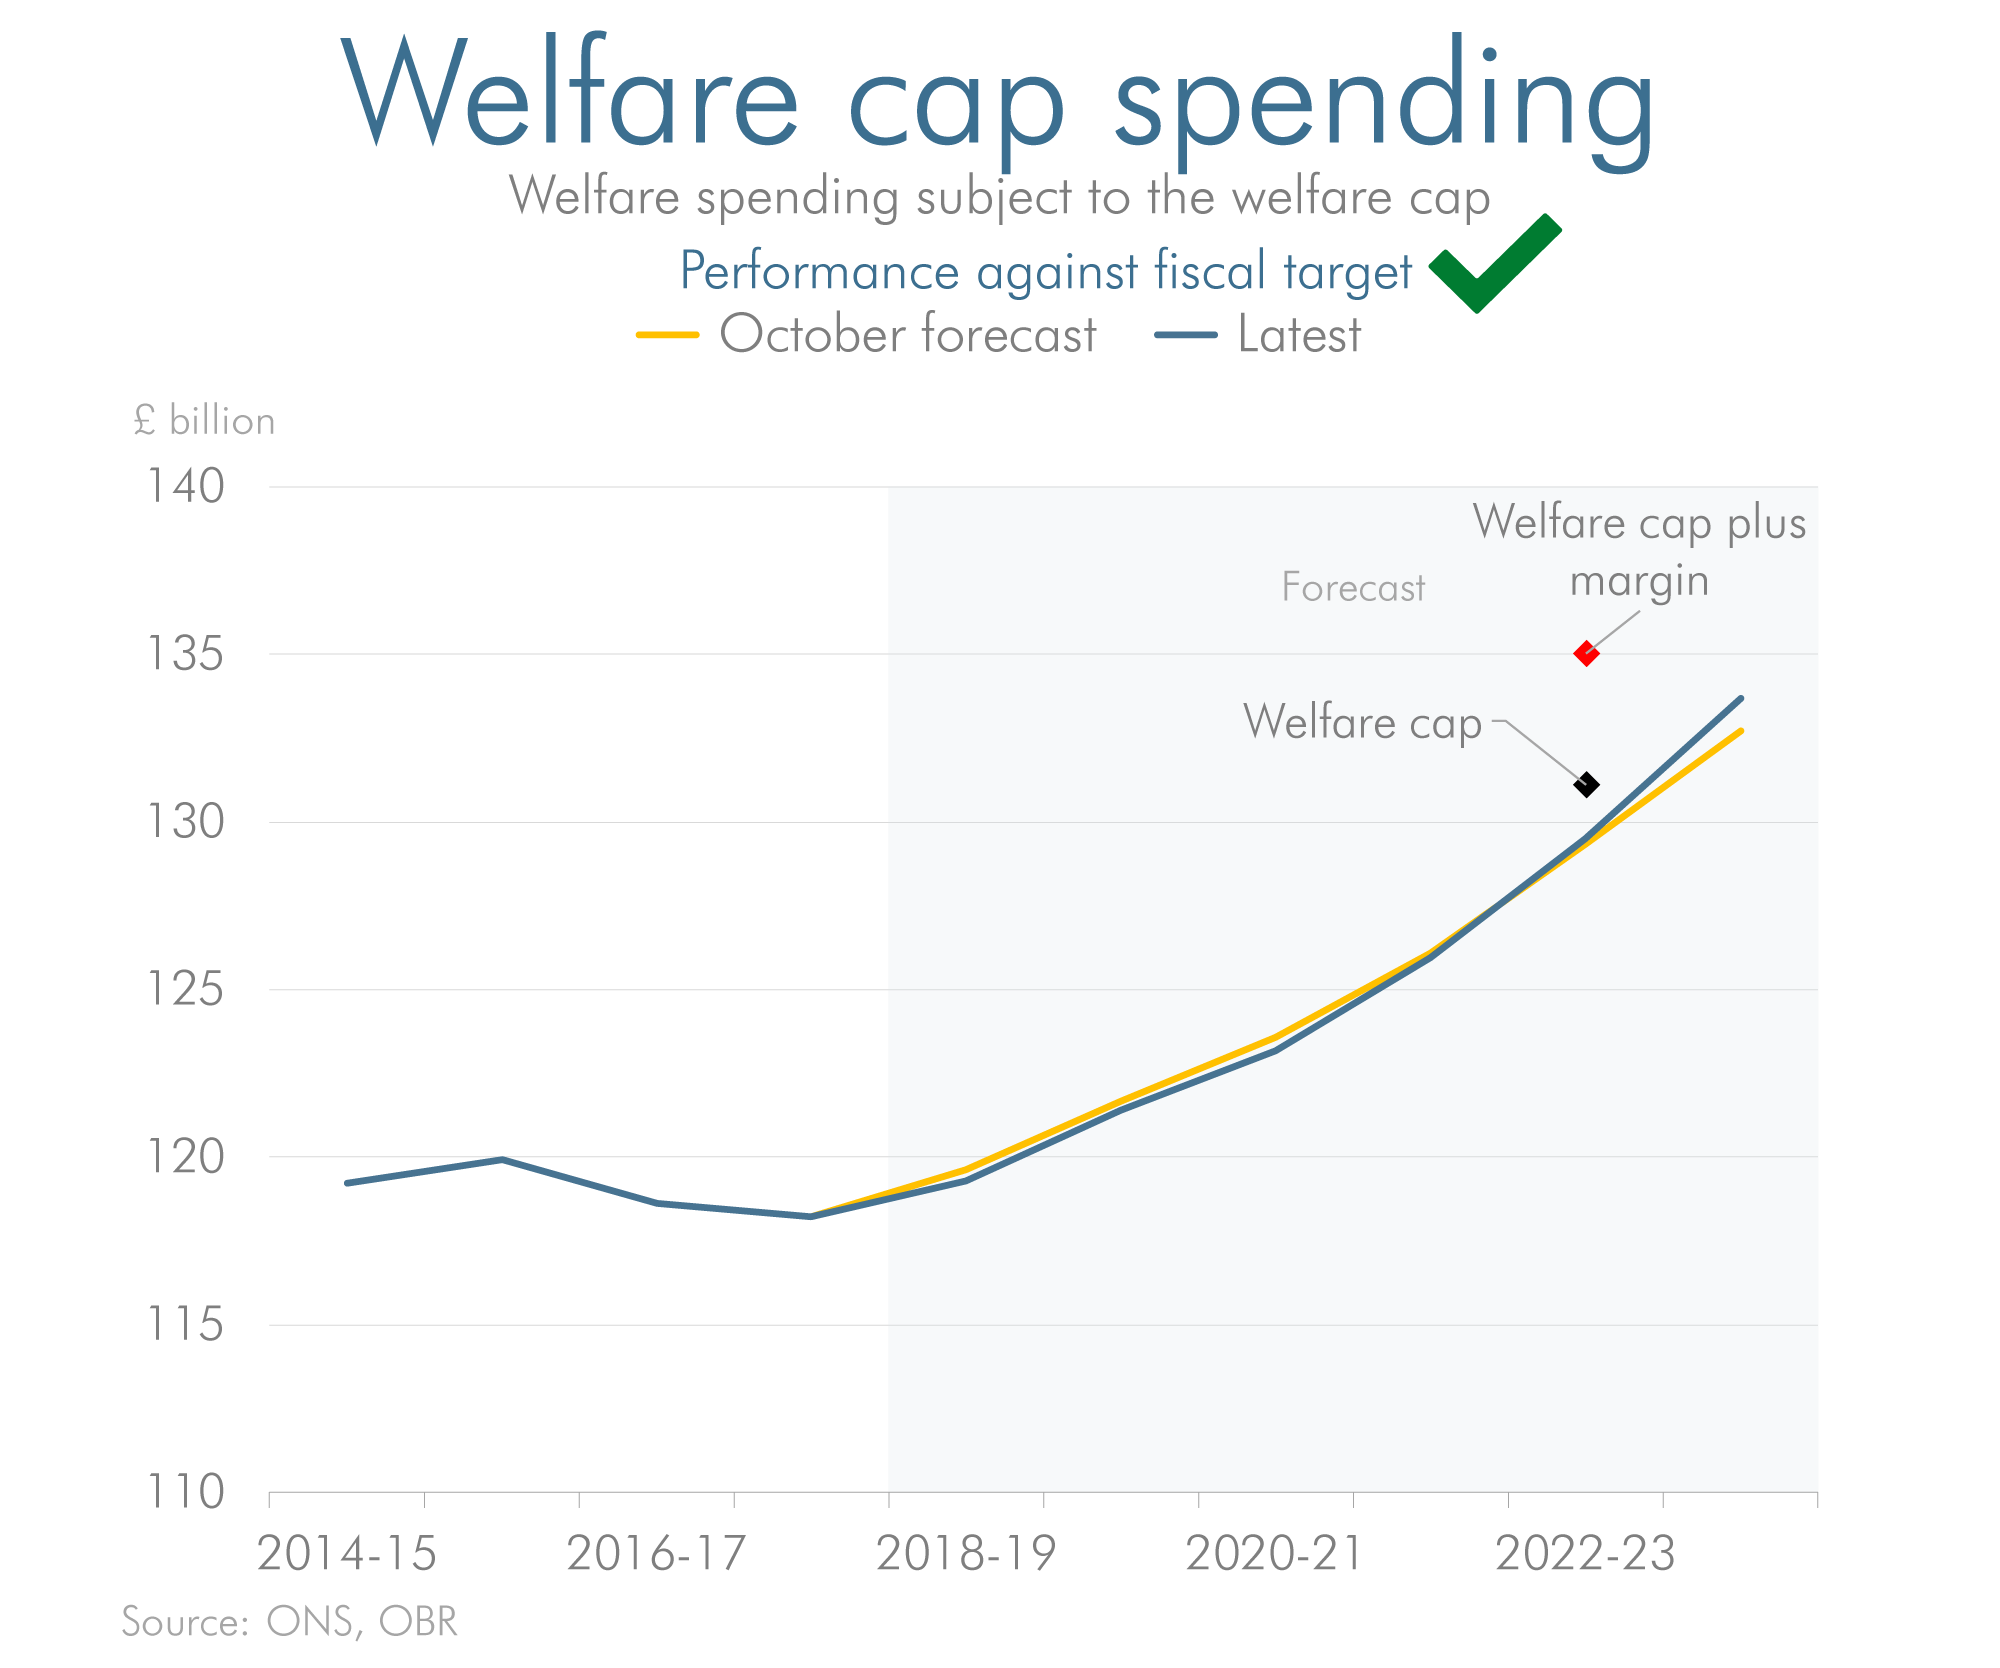 Latest forecast versus previous forecast for welfare cap spending